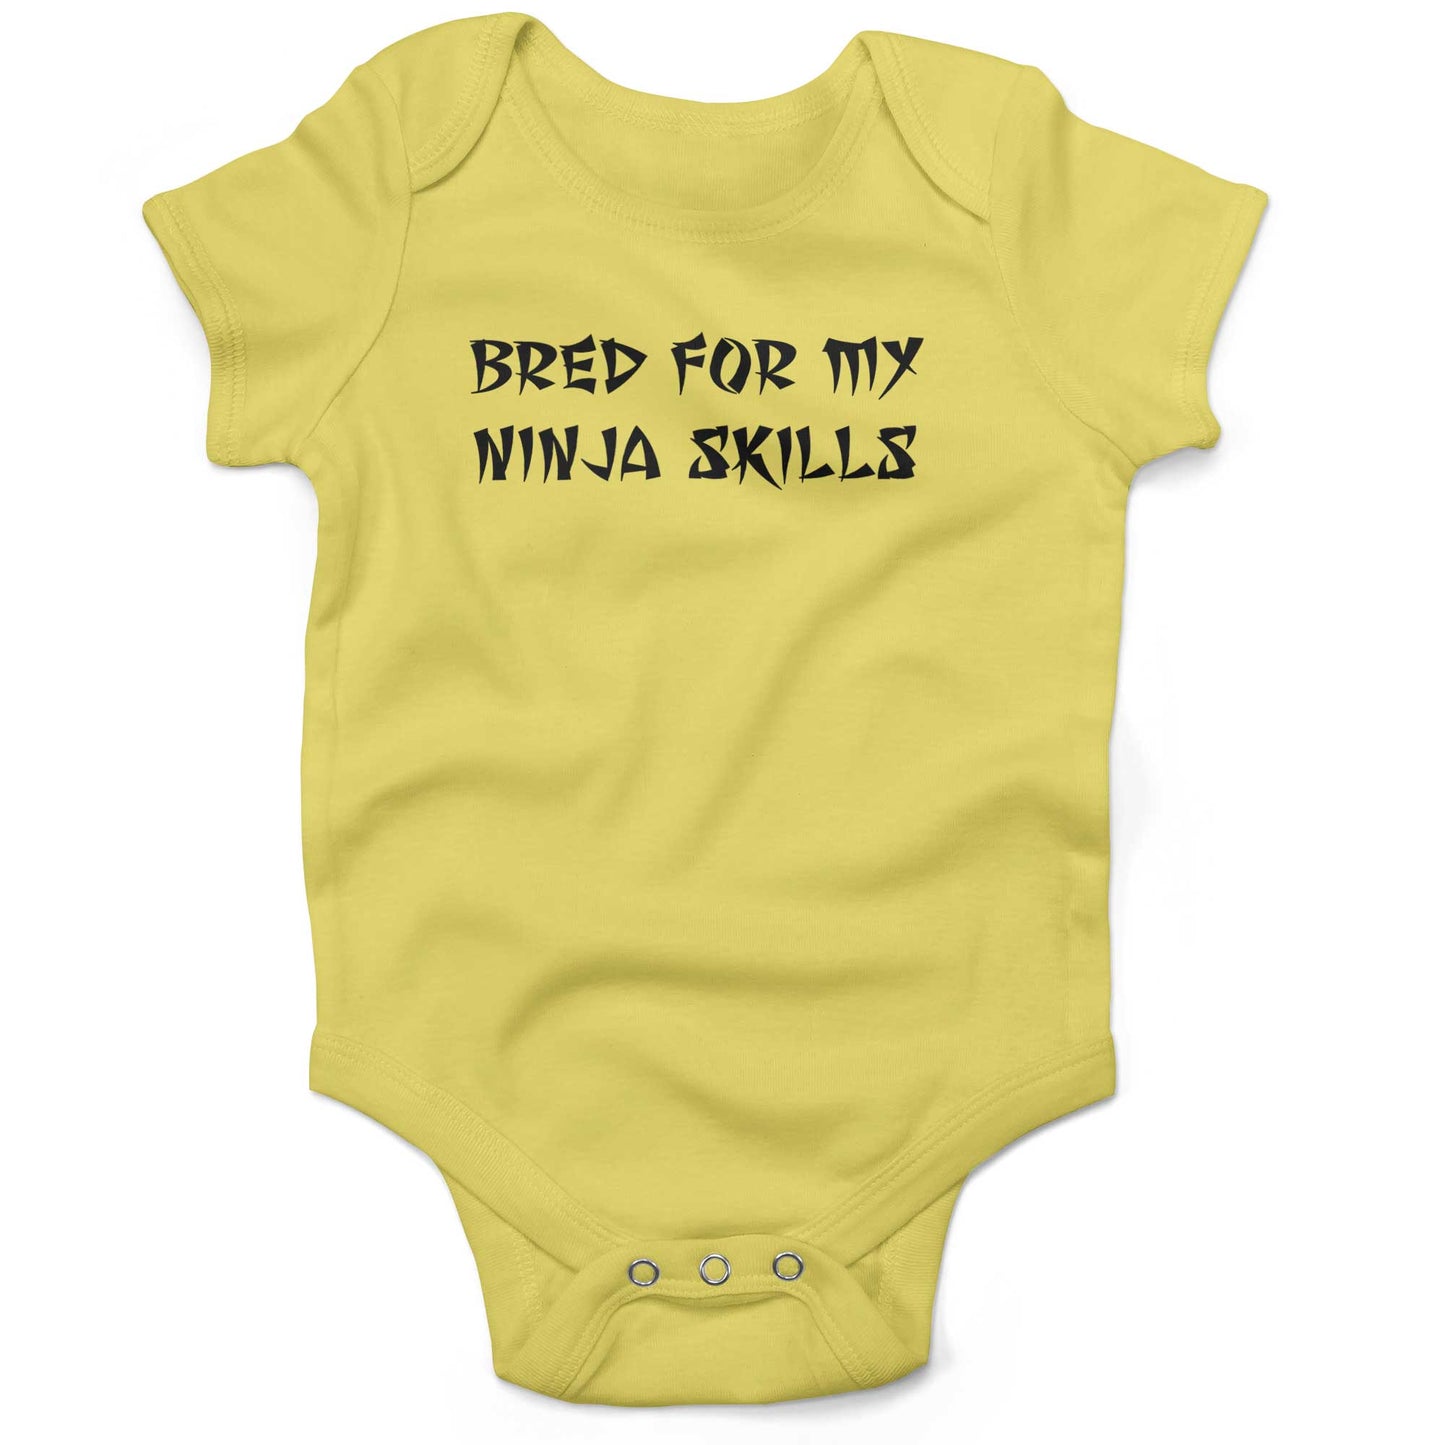 Bred For My Ninja Skills Infant Bodysuit or Raglan Baby Tee-Yellow-3-6 months